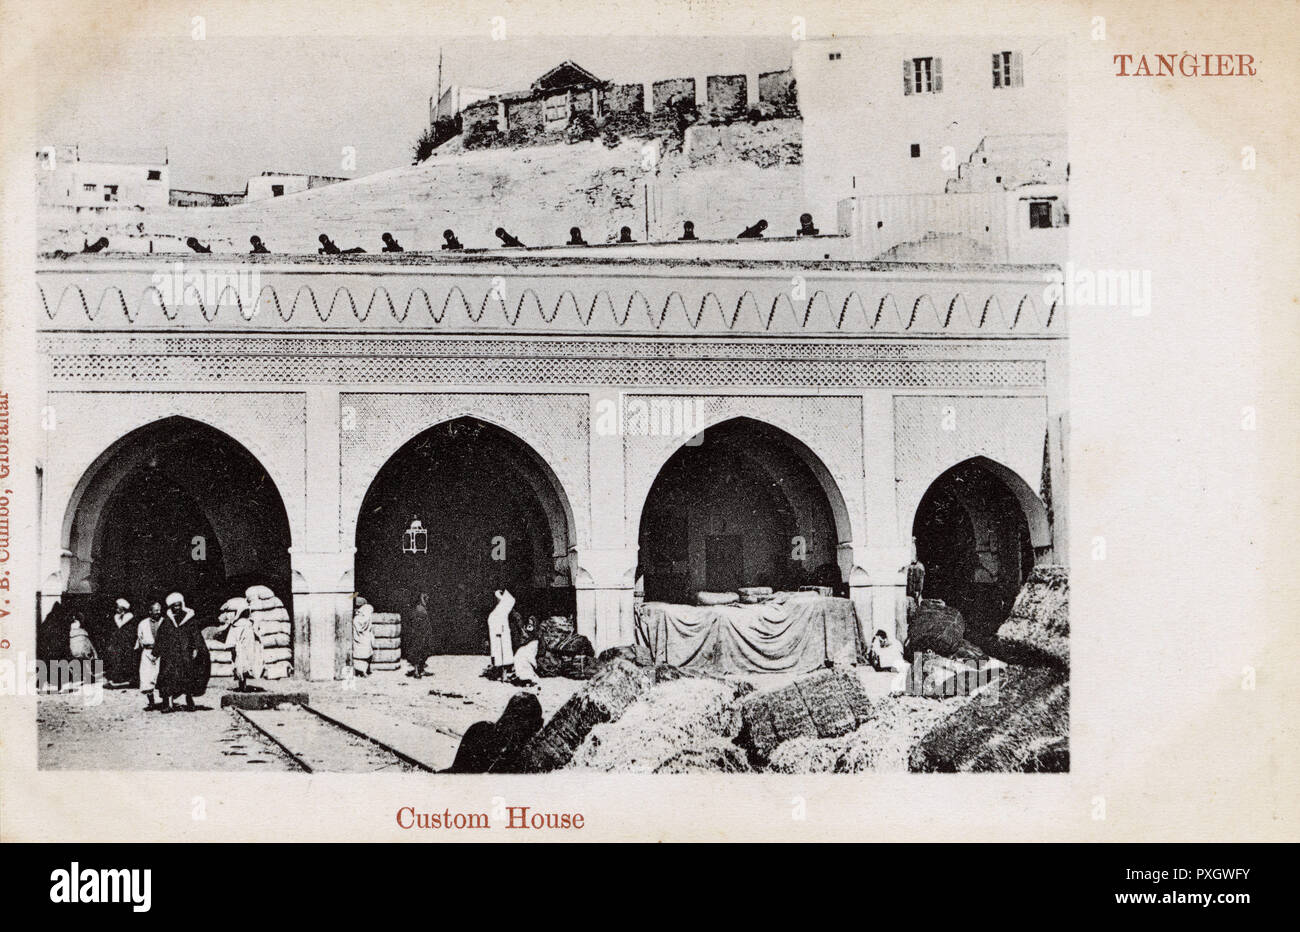 Tangier, Morocco - Custom House Stock Photo